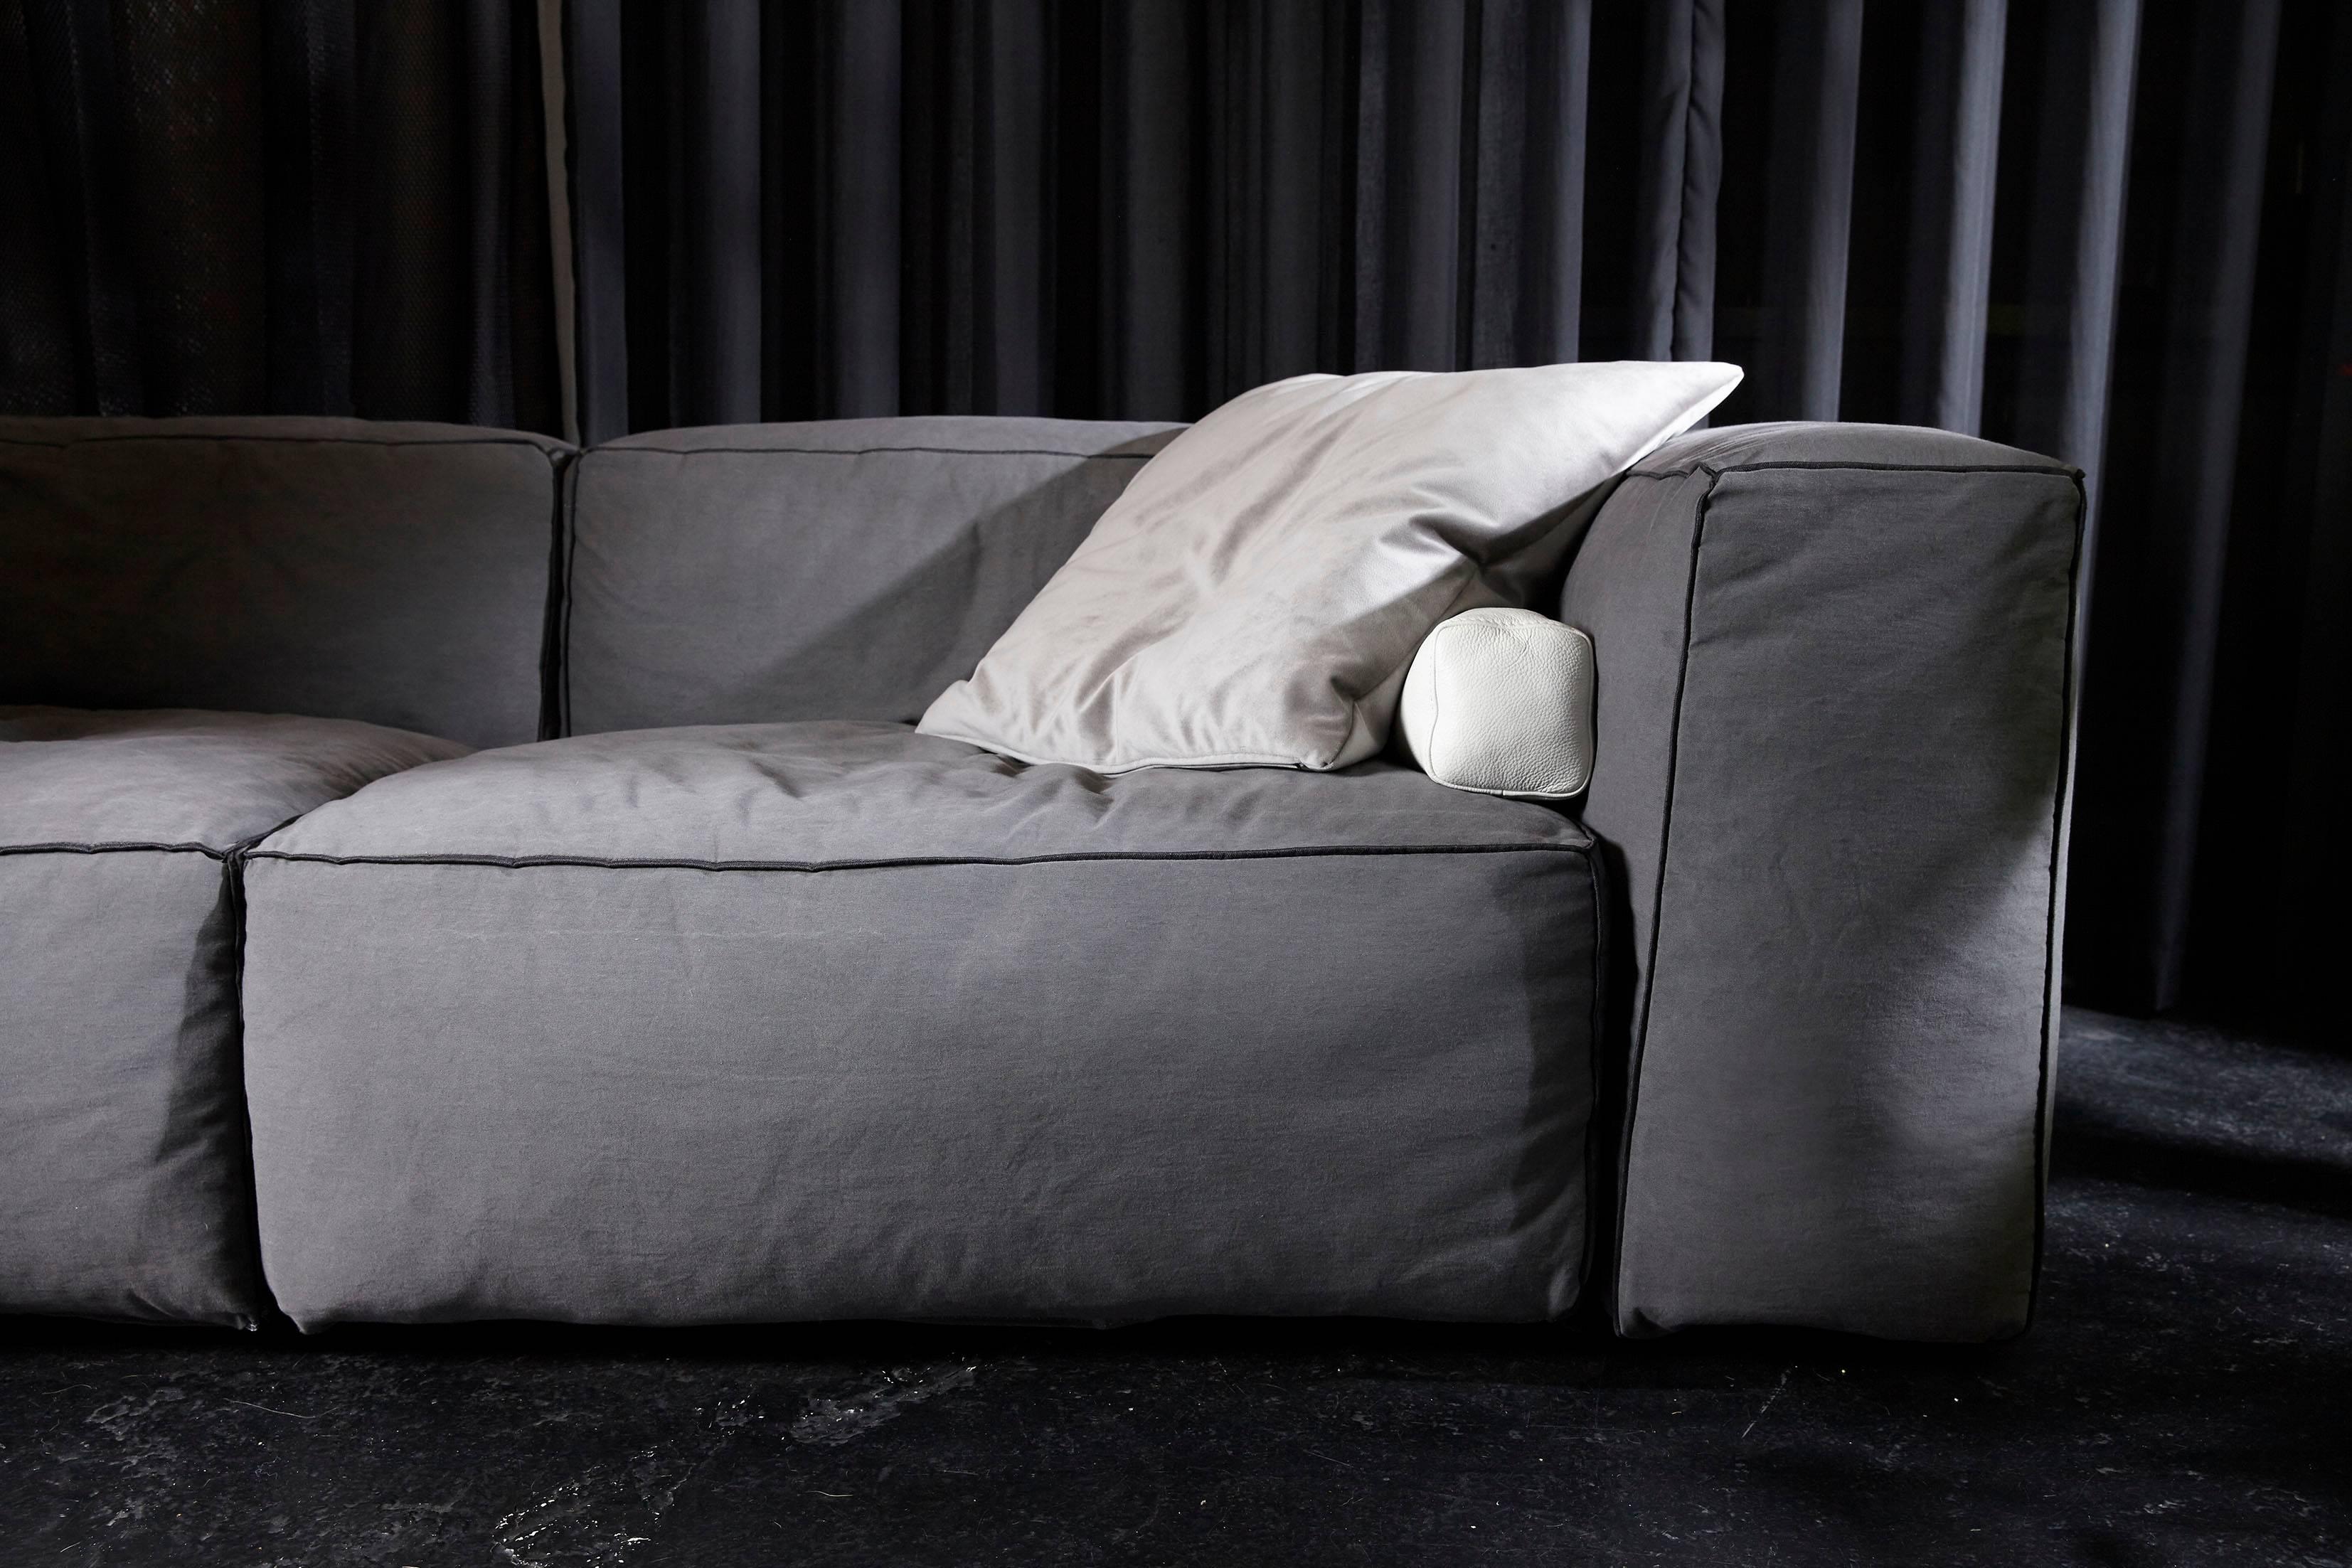 modular sofa cover